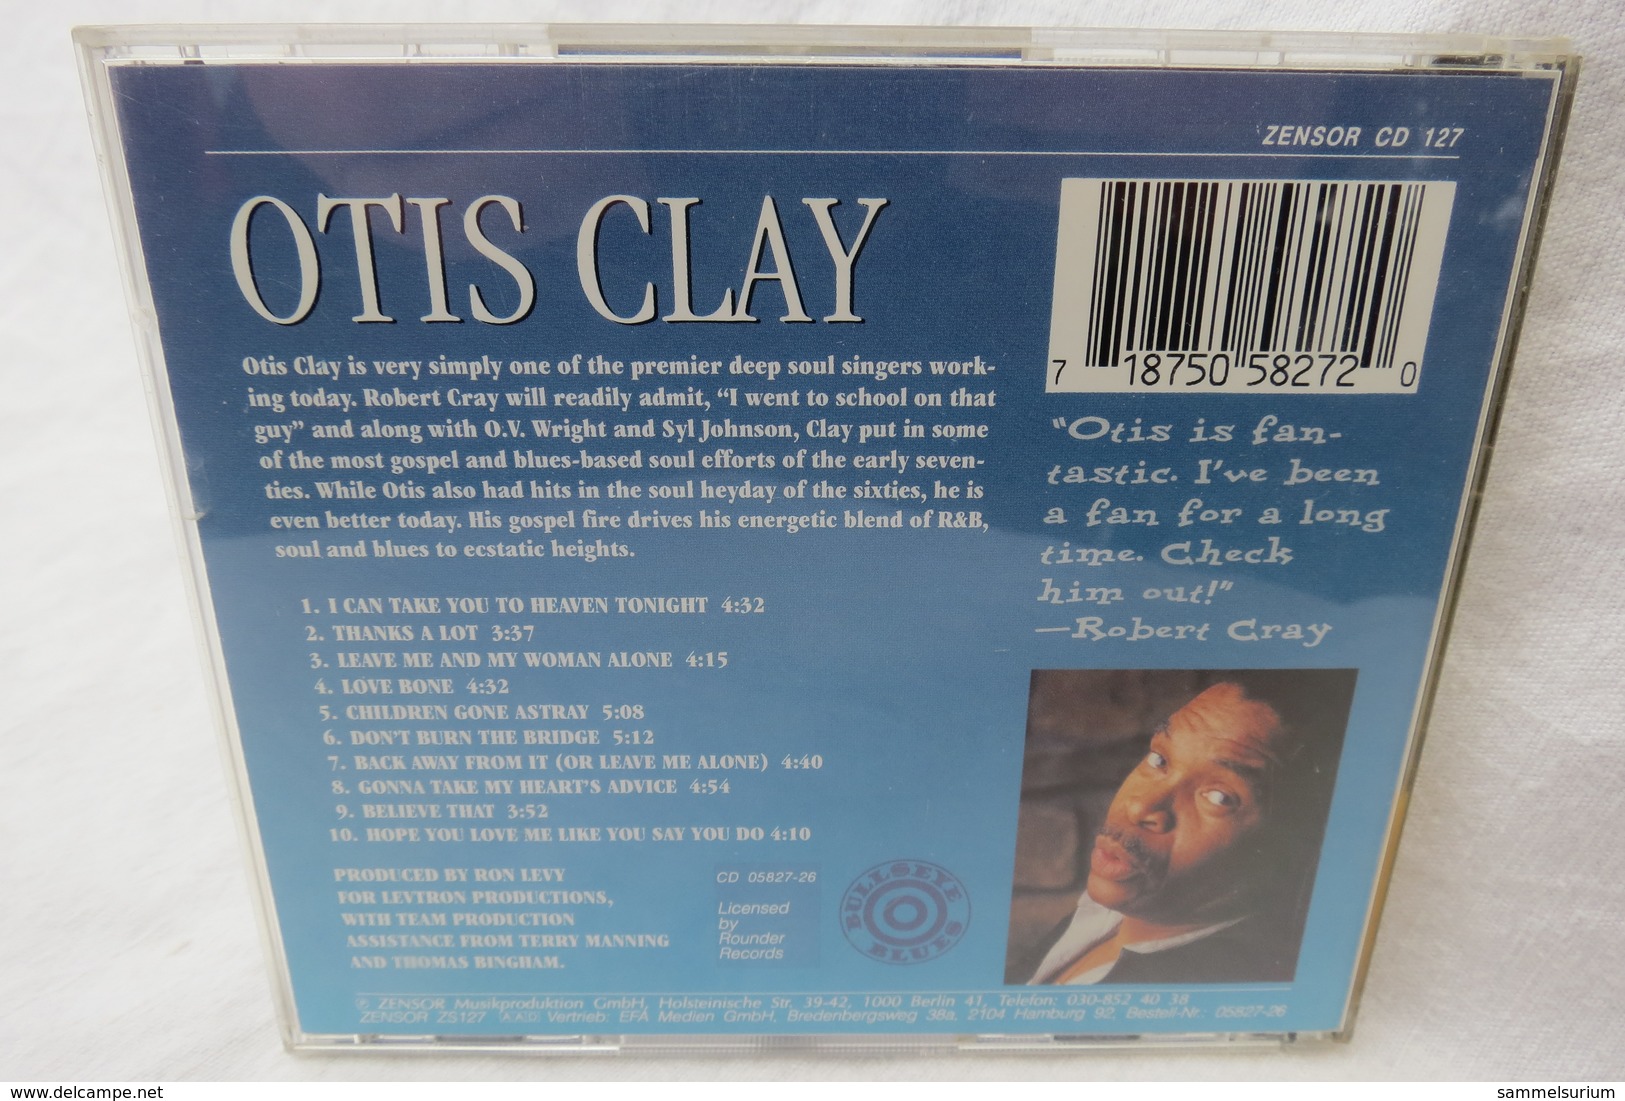 CD "Otis Clay" I'll Treat You Right - Soul - R&B